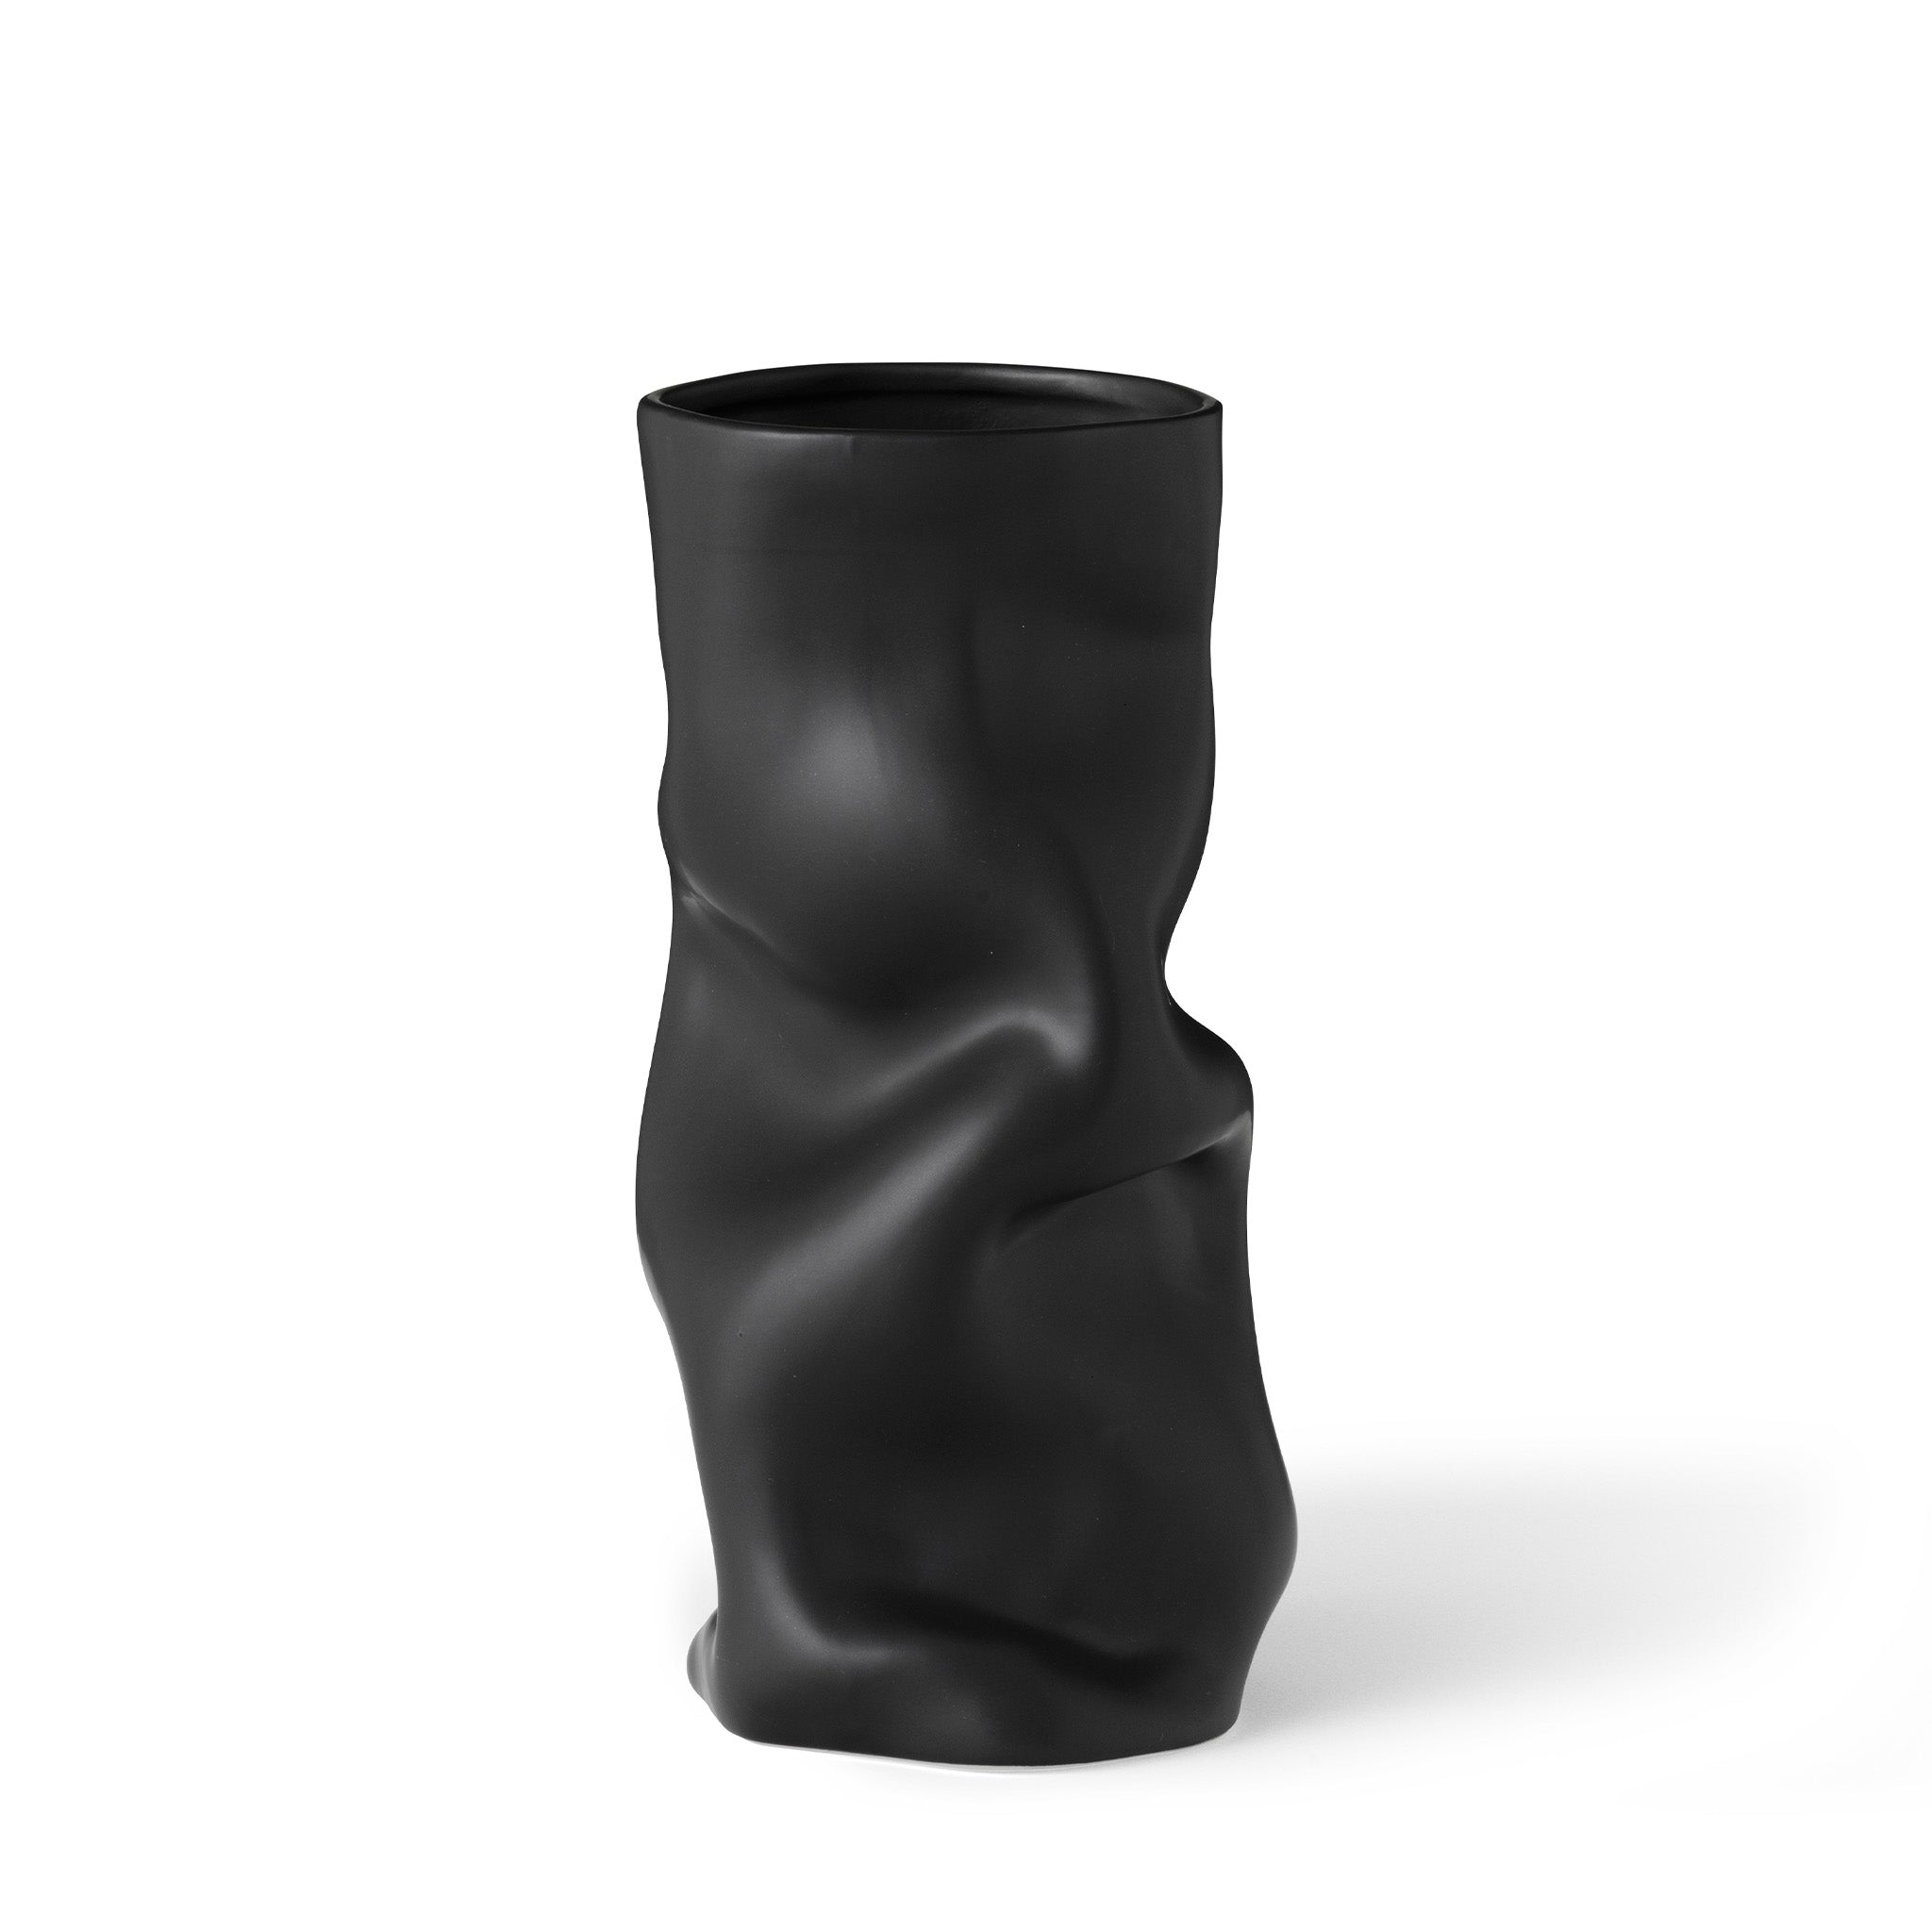 Collapse Vase By Sofia Tufvasson